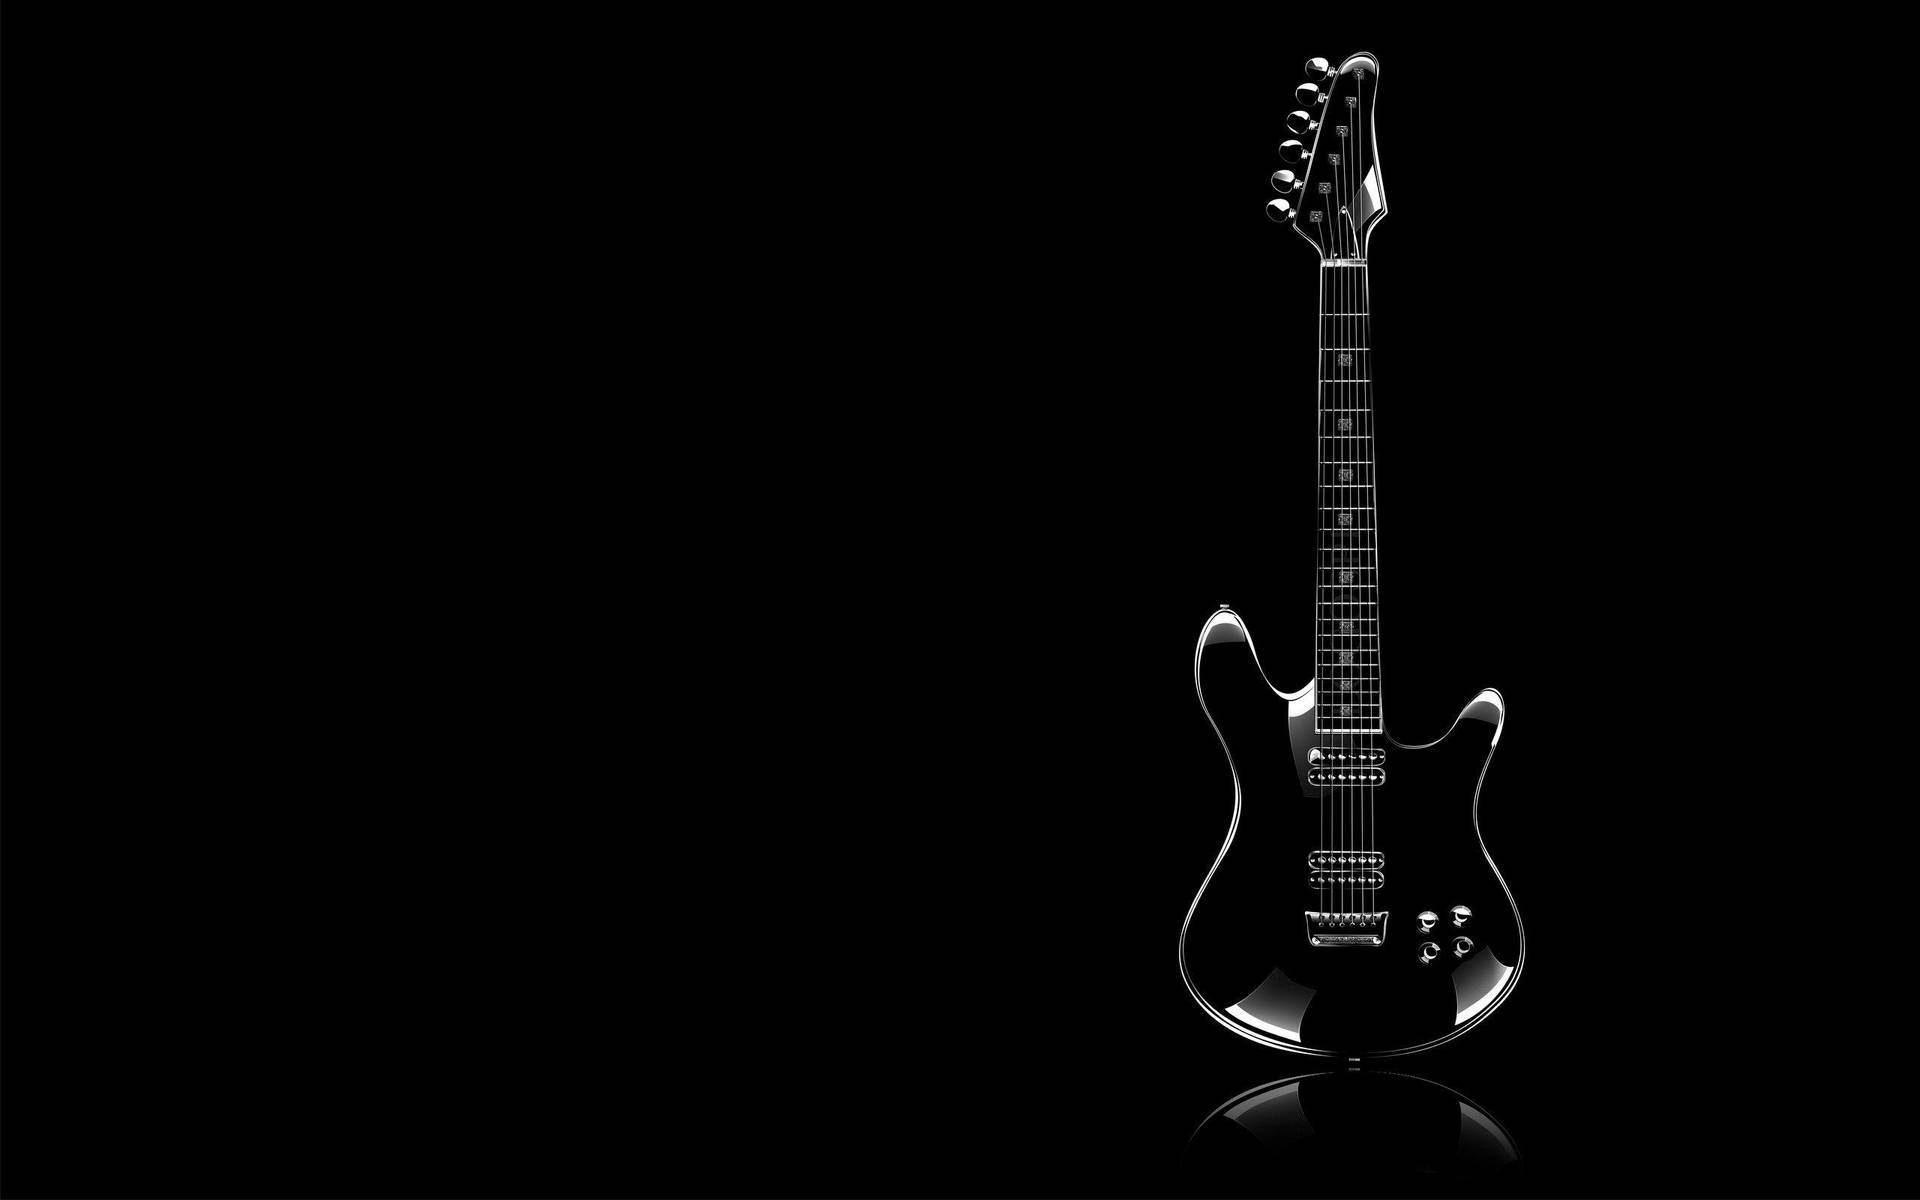 Black Guitar Against Dark Screen Background